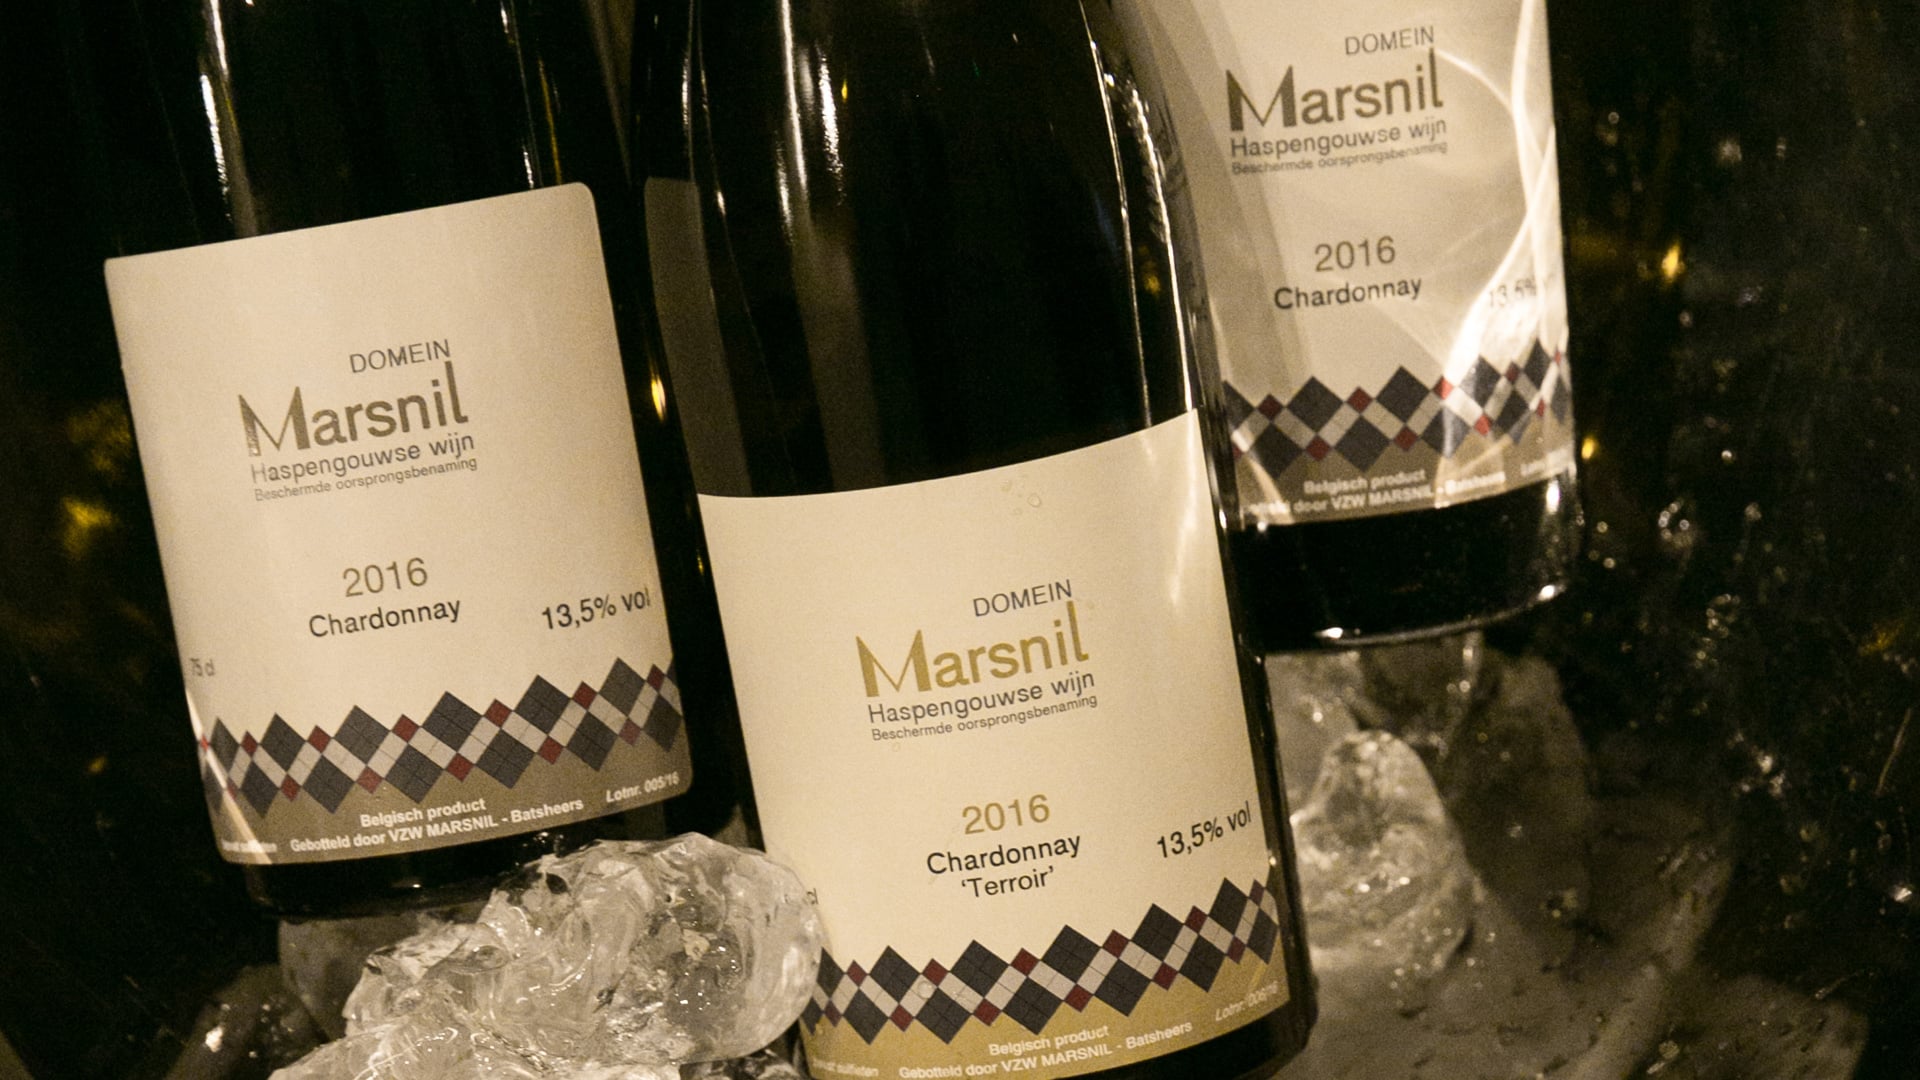 Onze wijnen - Domein Marsnil